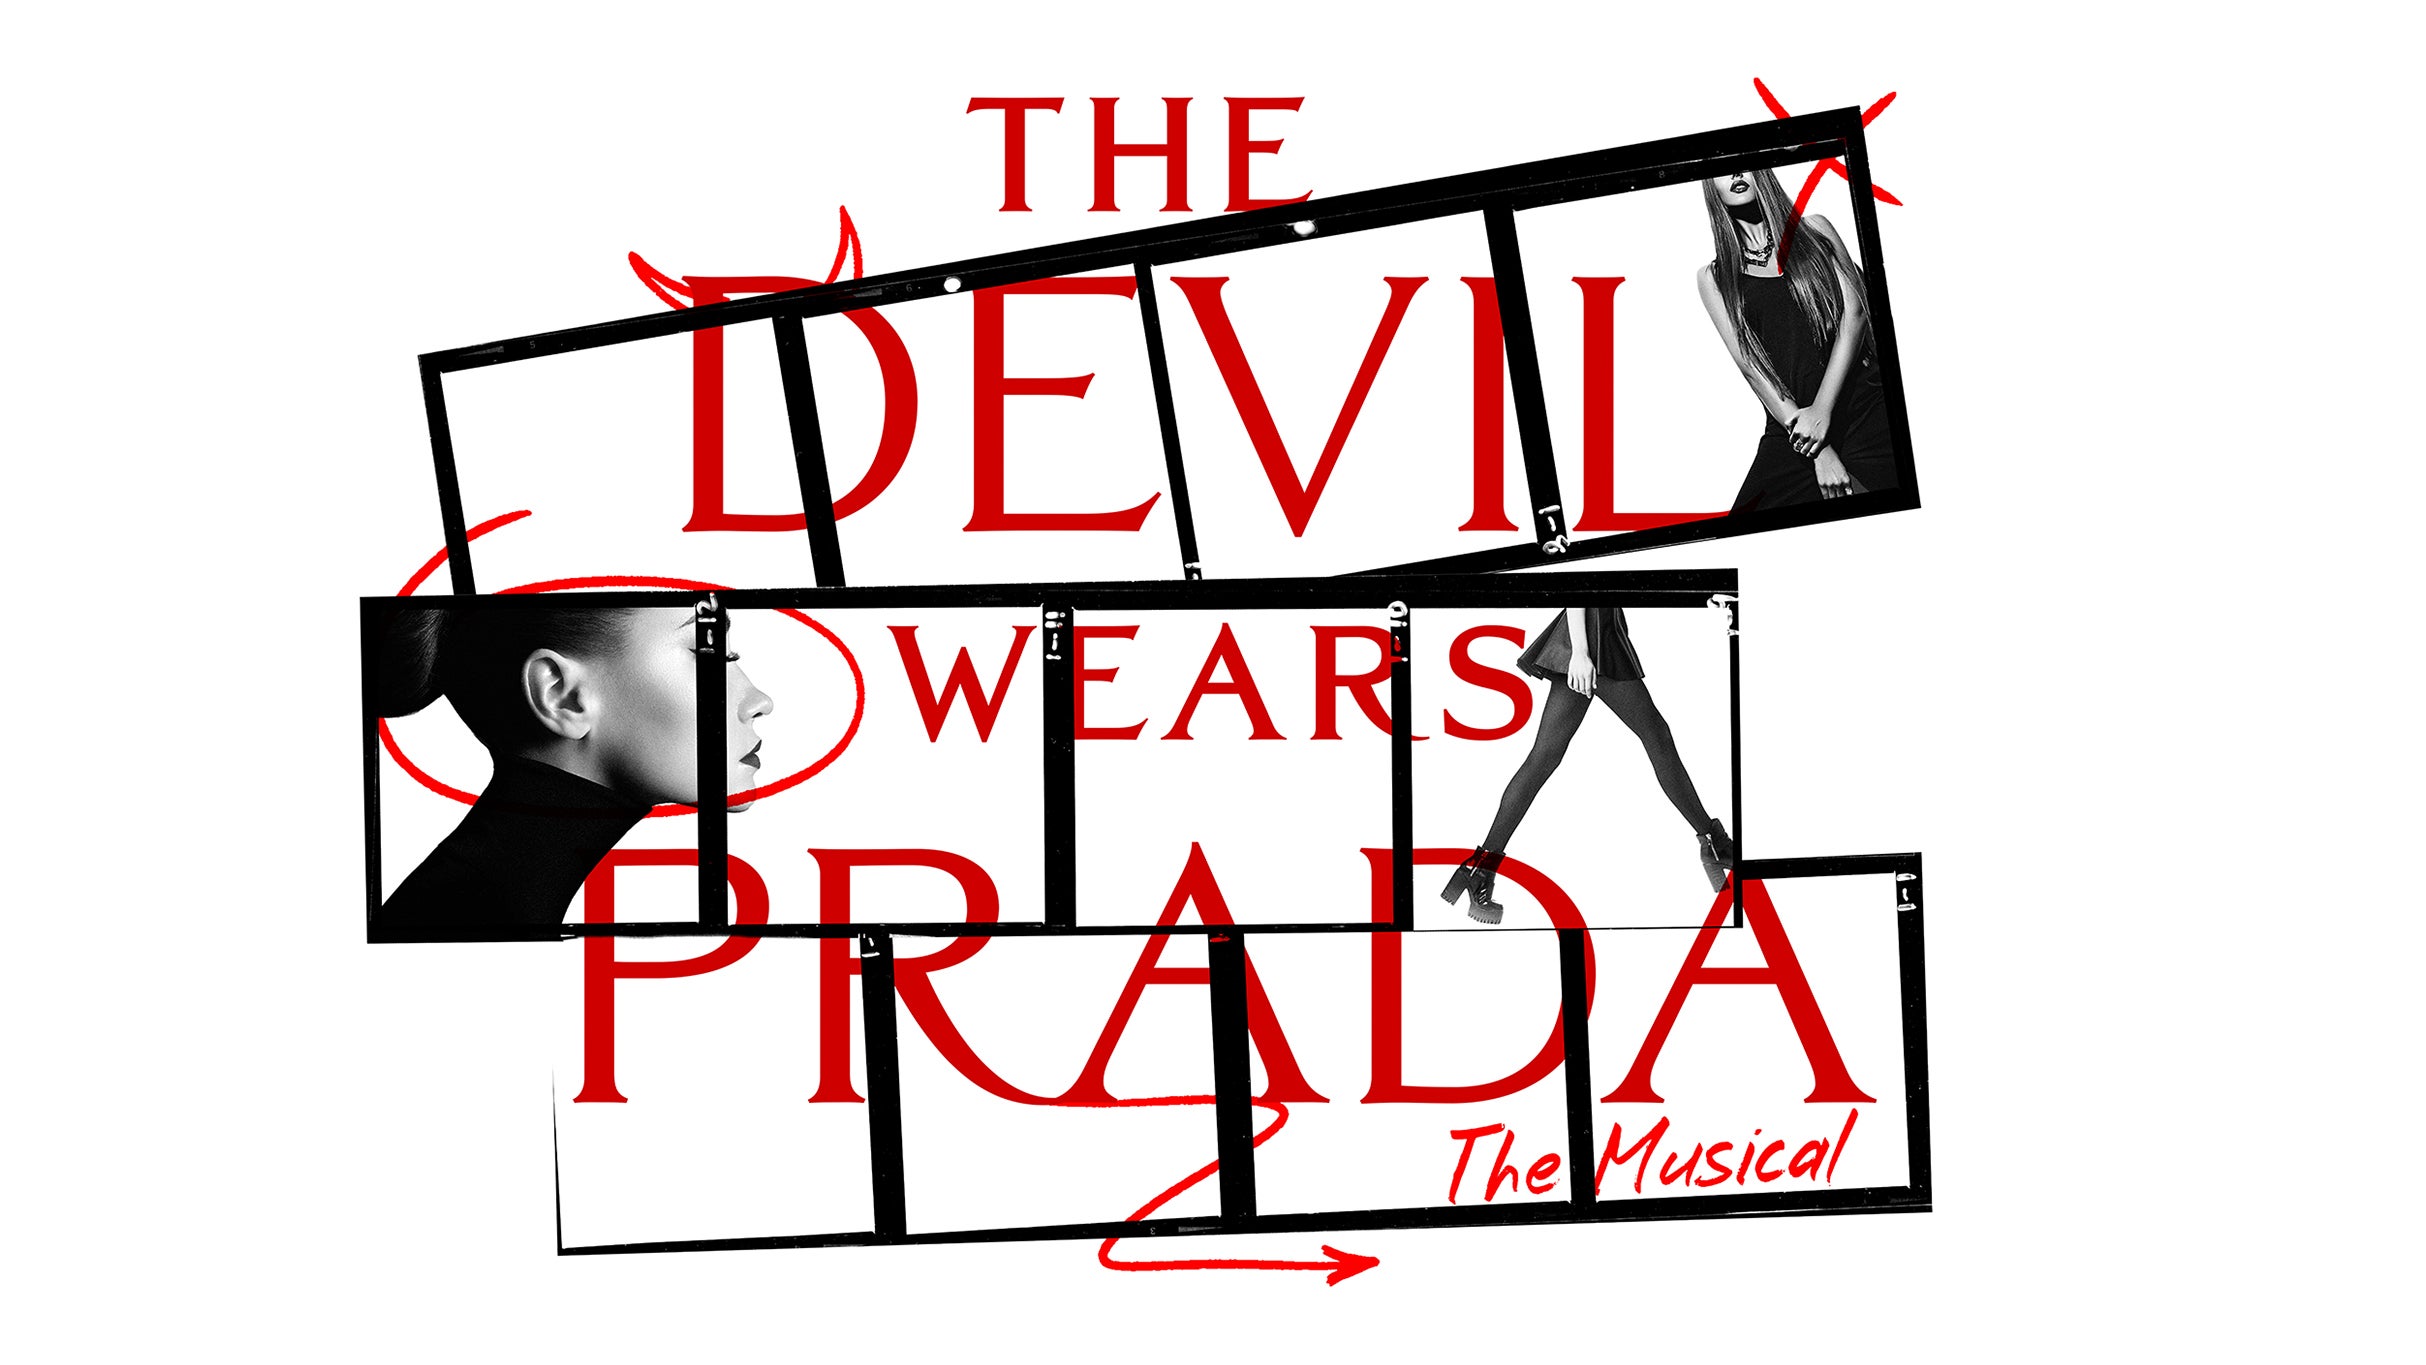 The Devil Wears Prada (Chicago) in Chicago promo photo for Online presale offer code